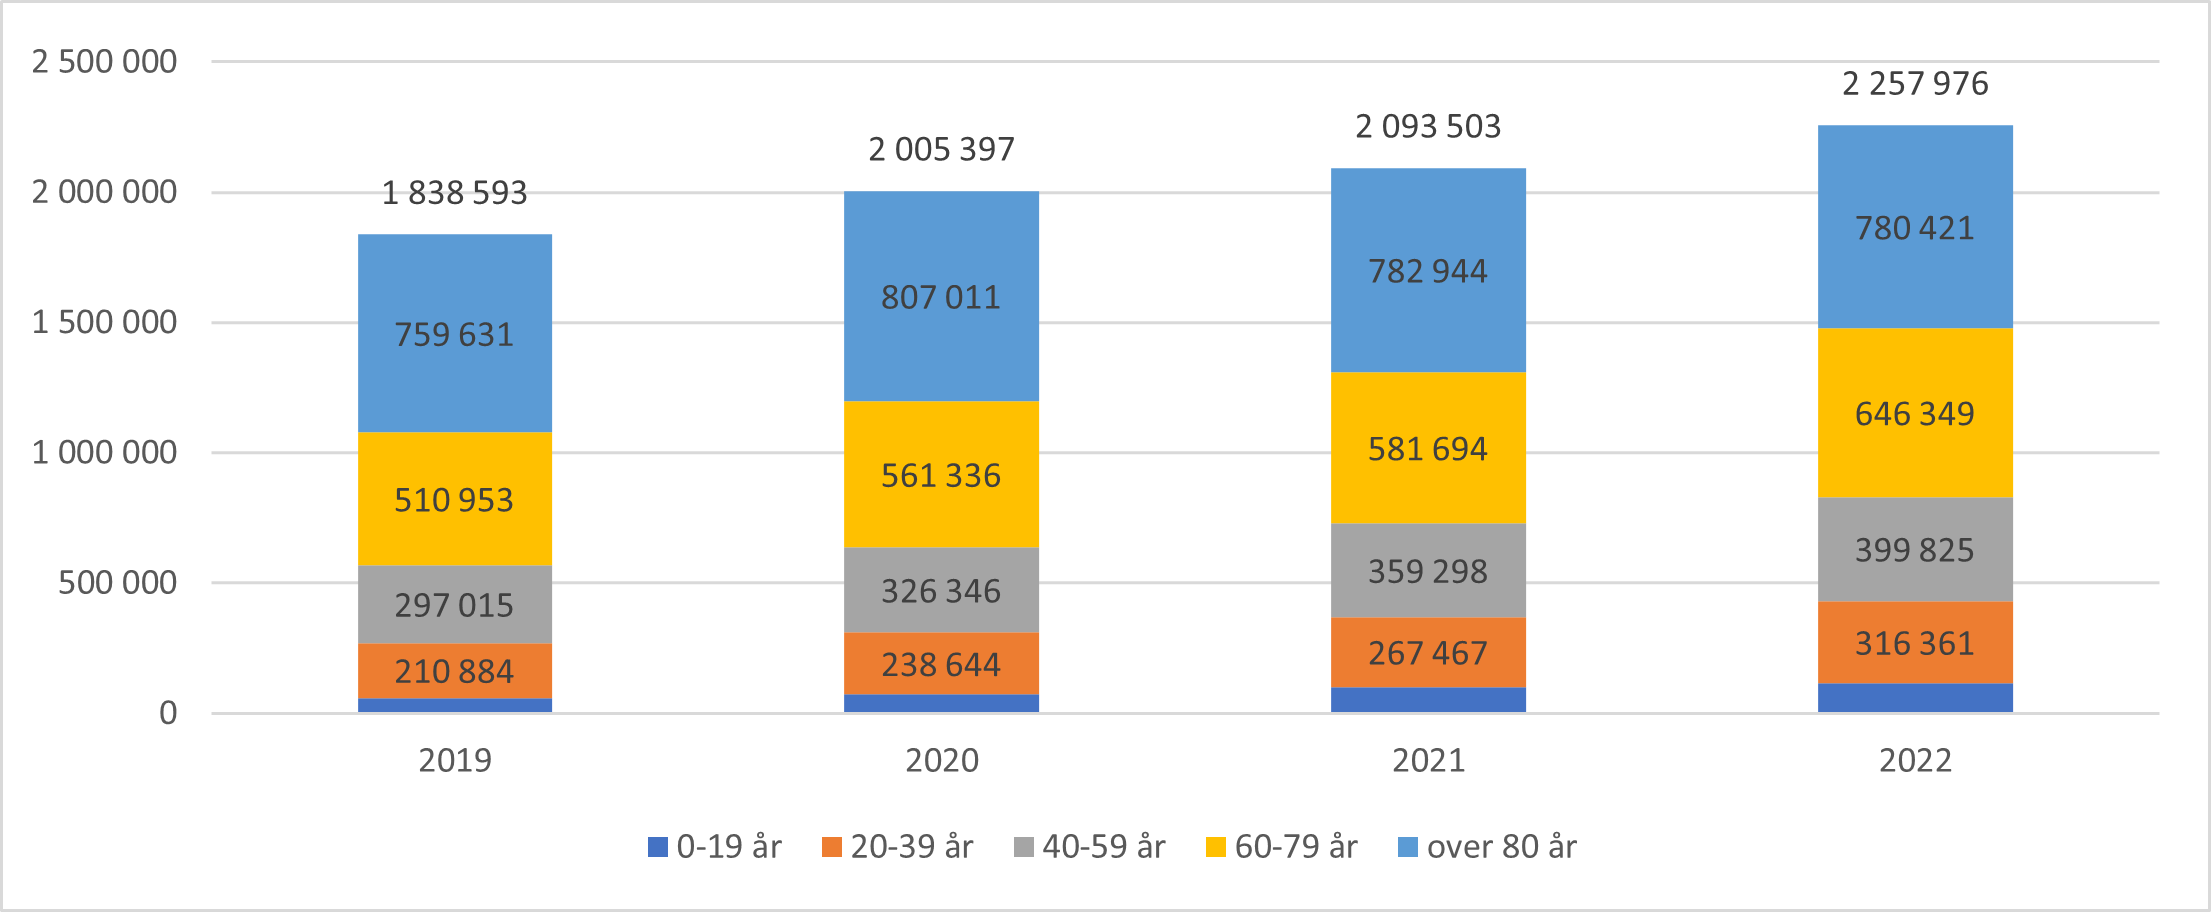 Antall enkle kontakter med helsepersonell/kommunale tjenester/NAV (absolutte tall) fordelt på aldersgrupper og totalt per år, 2019-2022.